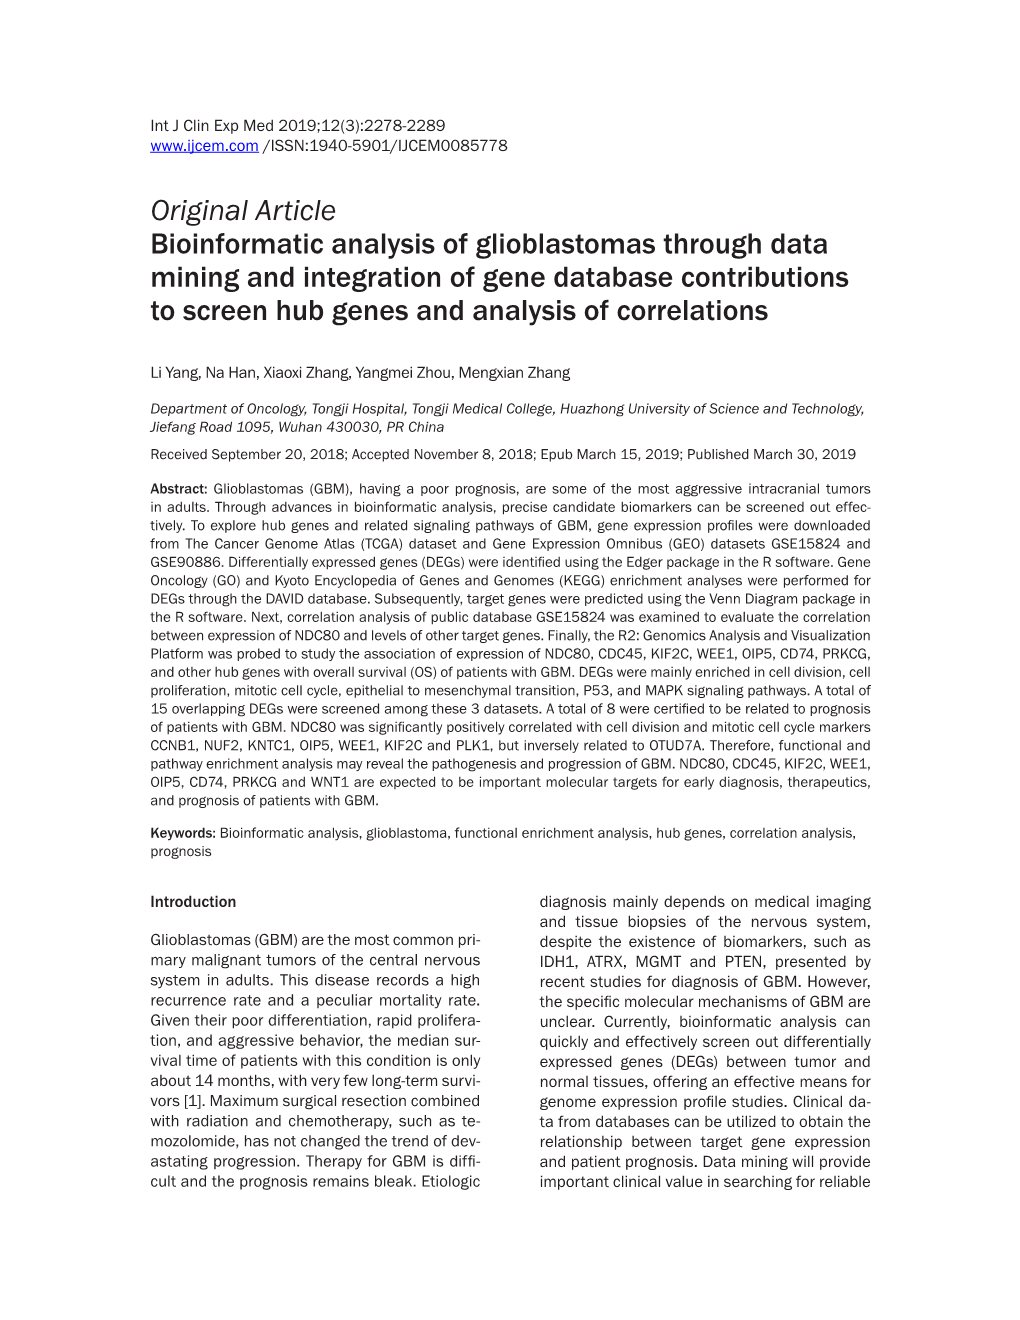 Original Article Bioinformatic Analysis of Glioblastomas Through Data